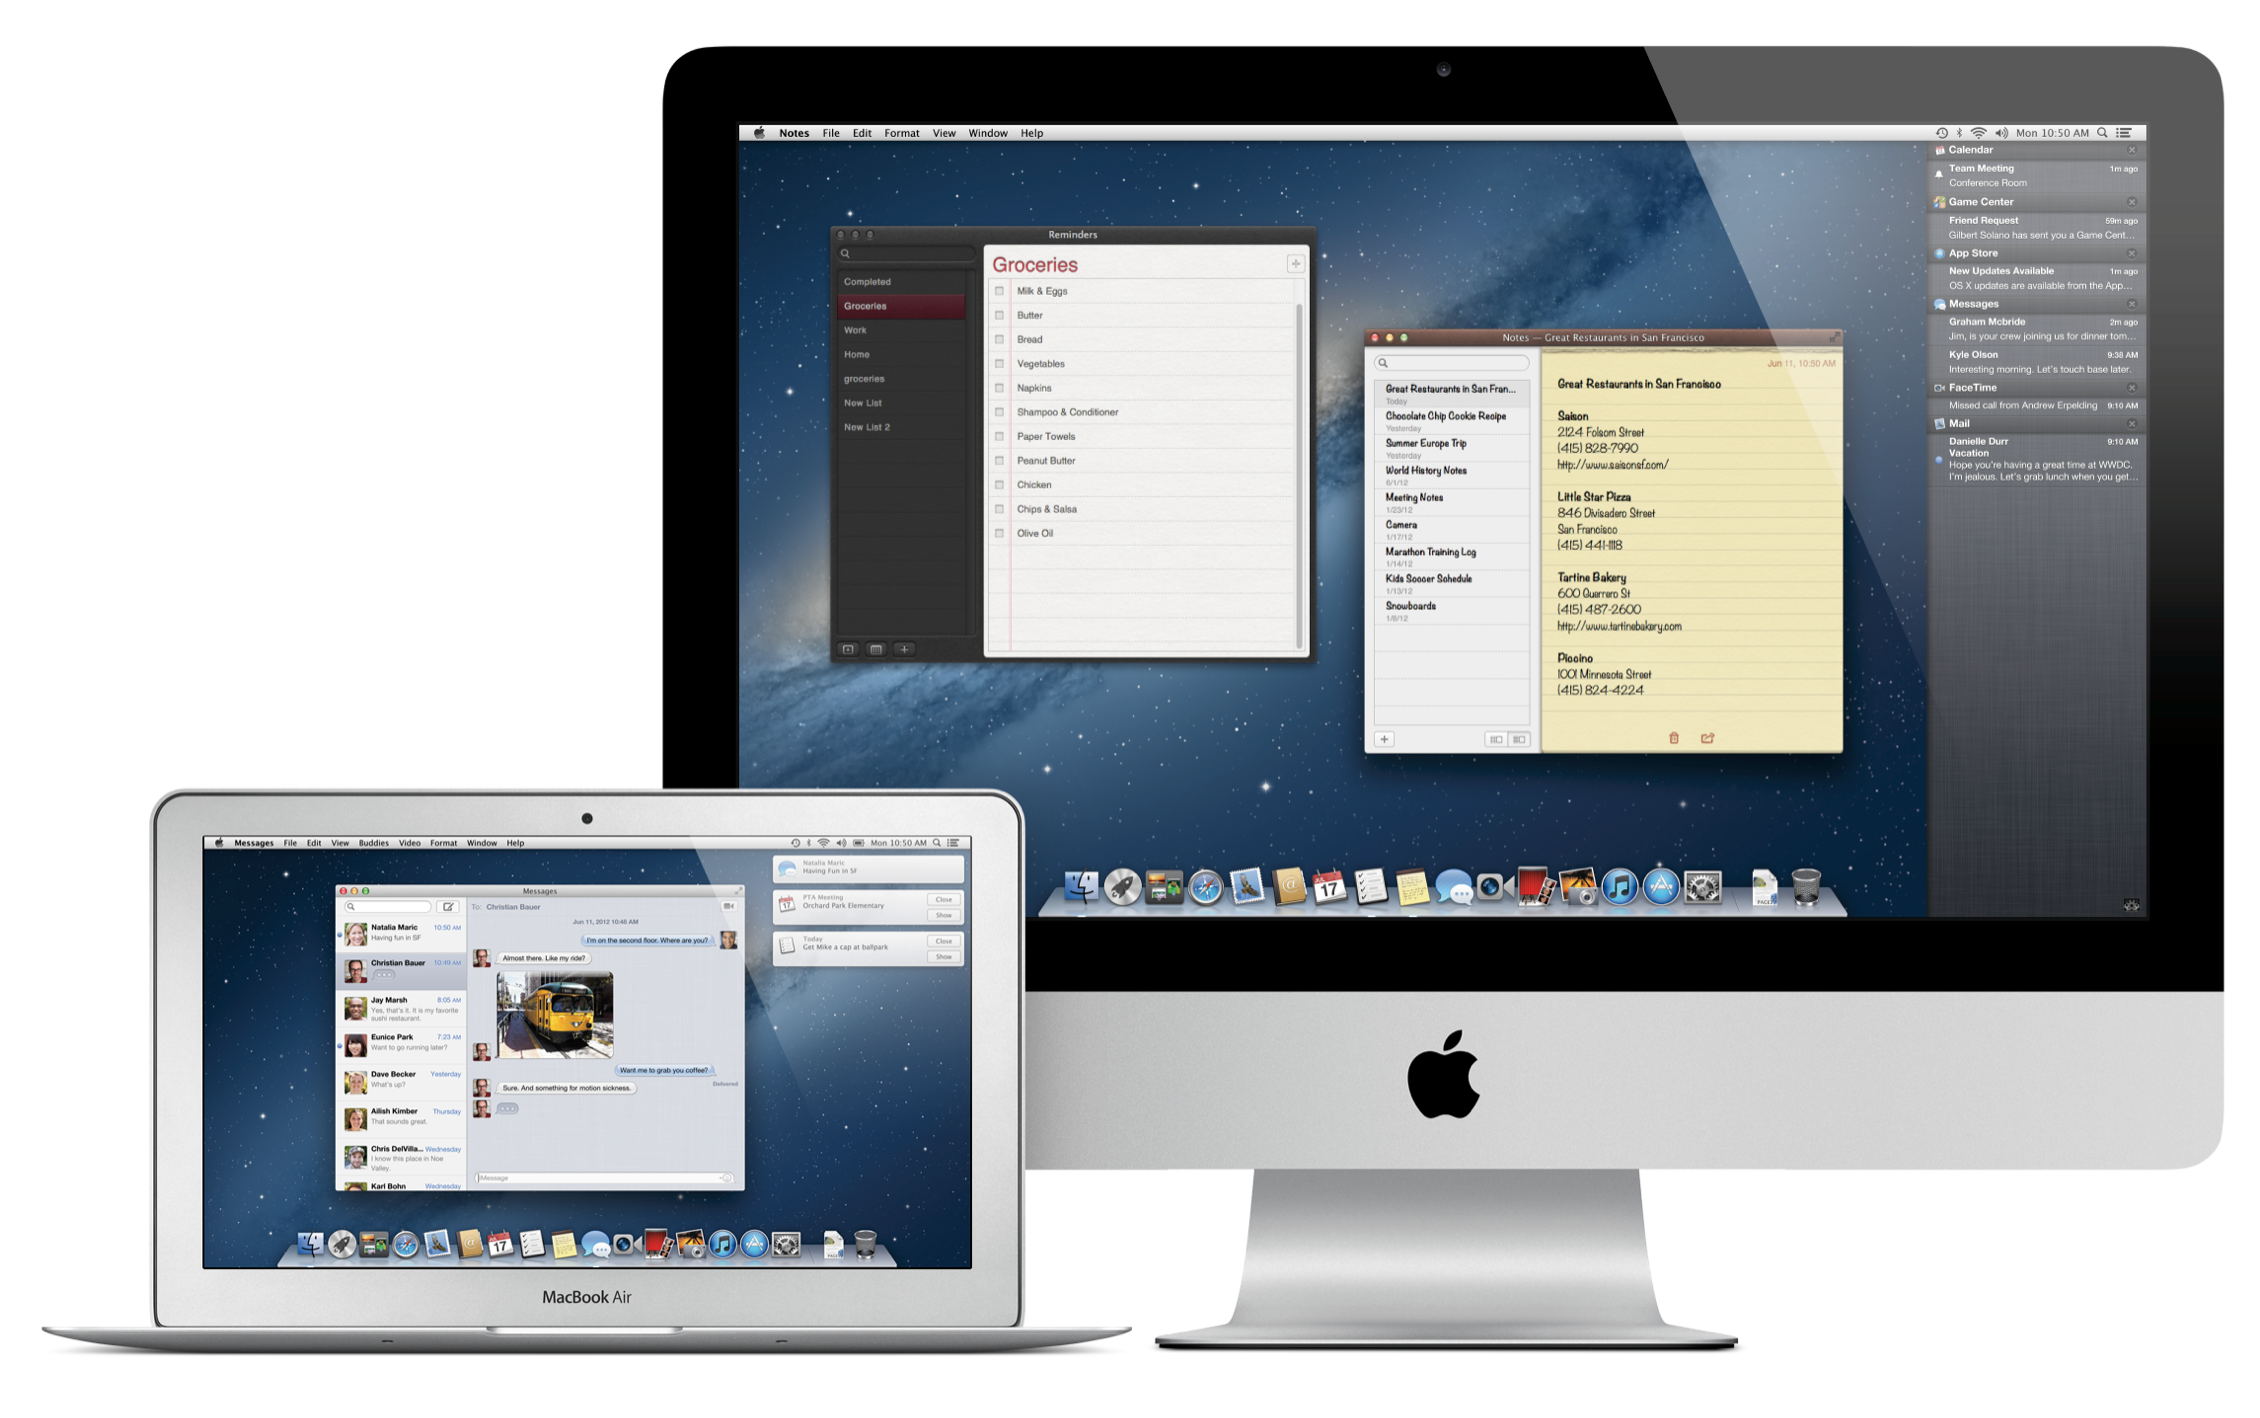 Mac Os X 10.8 Software Update